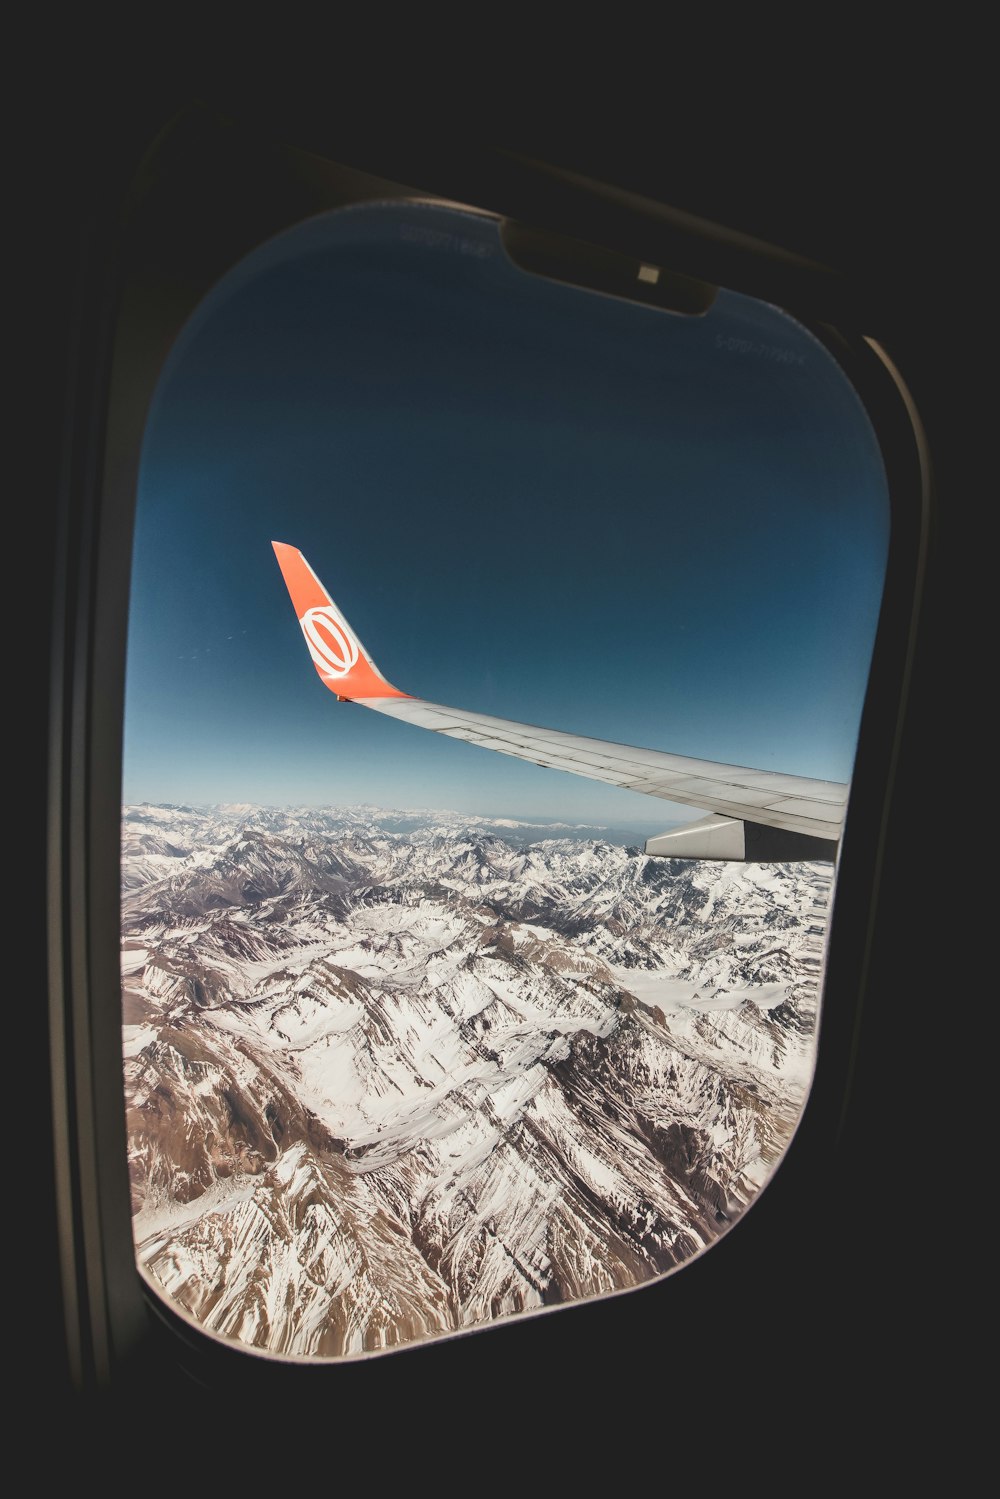 white and orange airplane tail viewing mountain